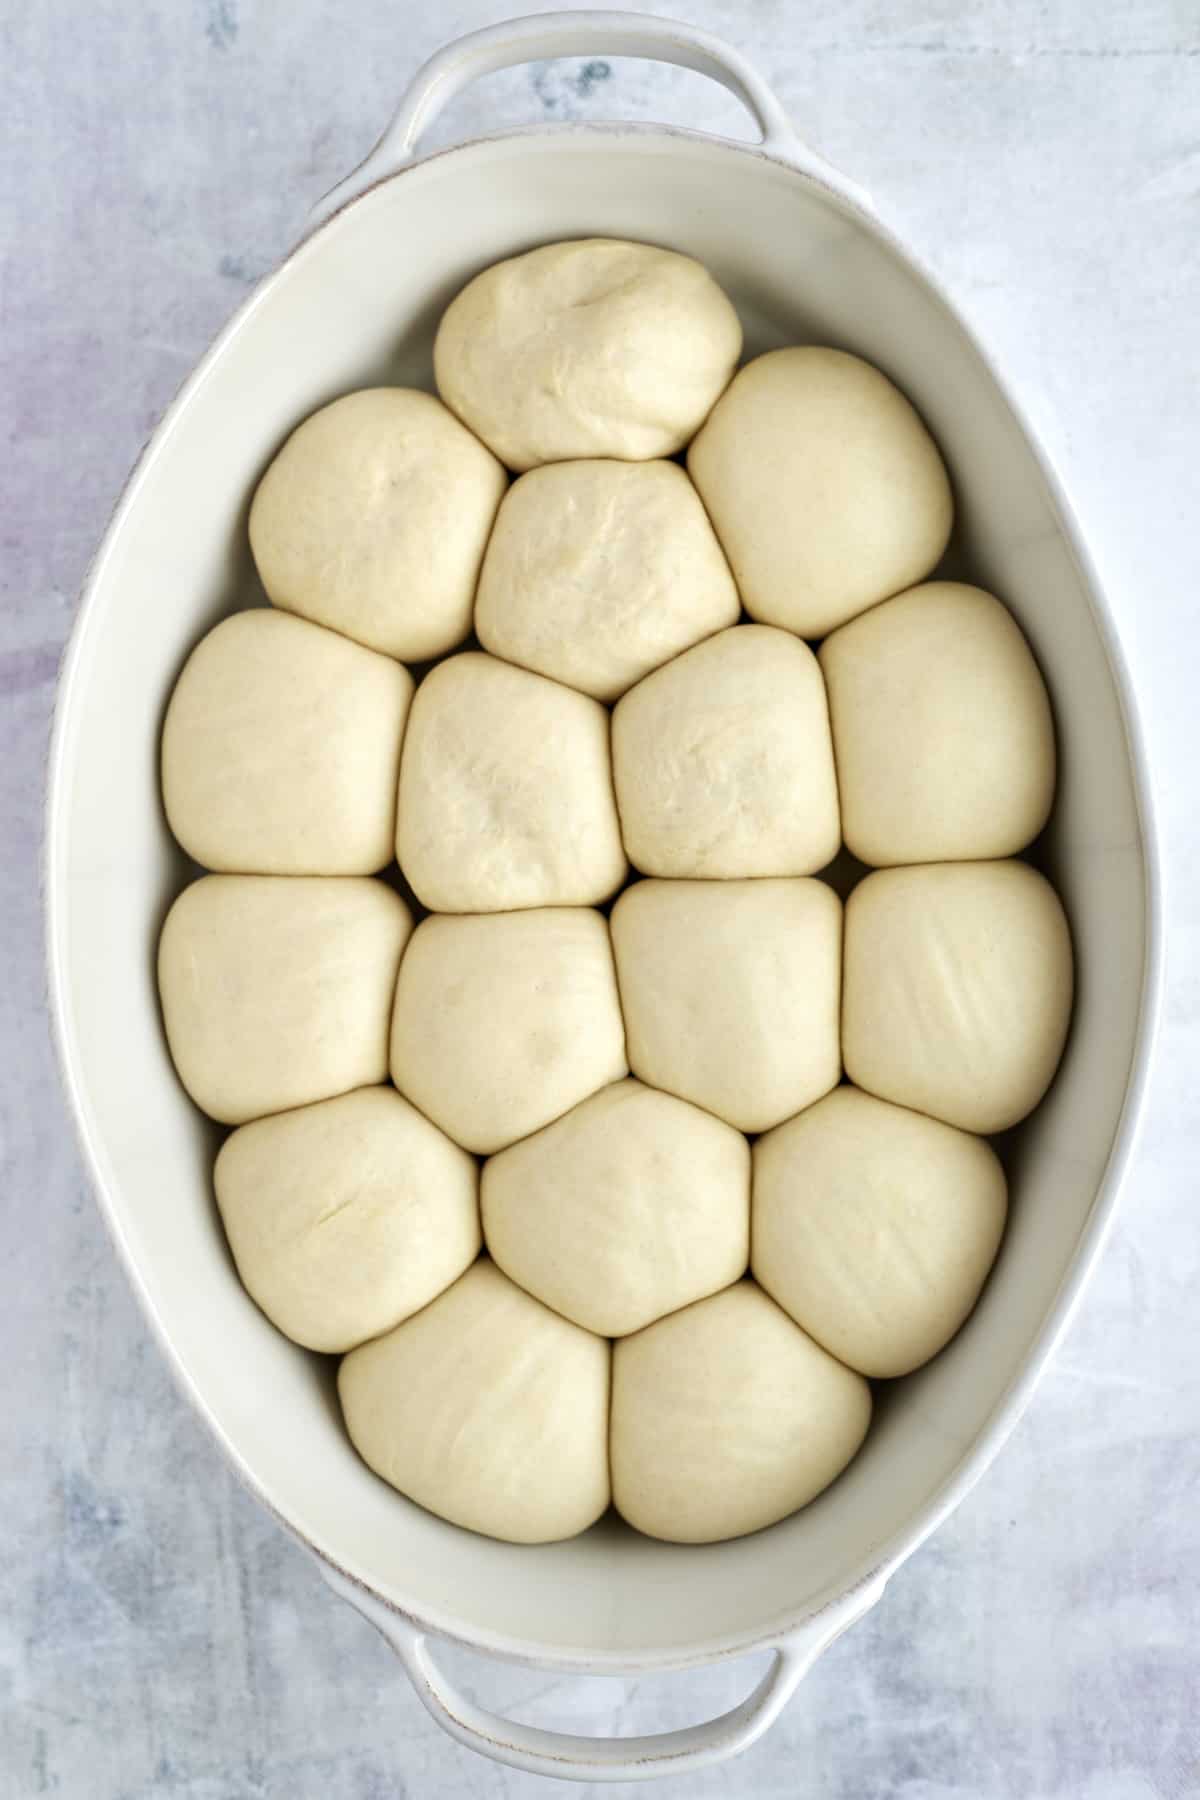 risen unbaked bread rolls in a baking dish